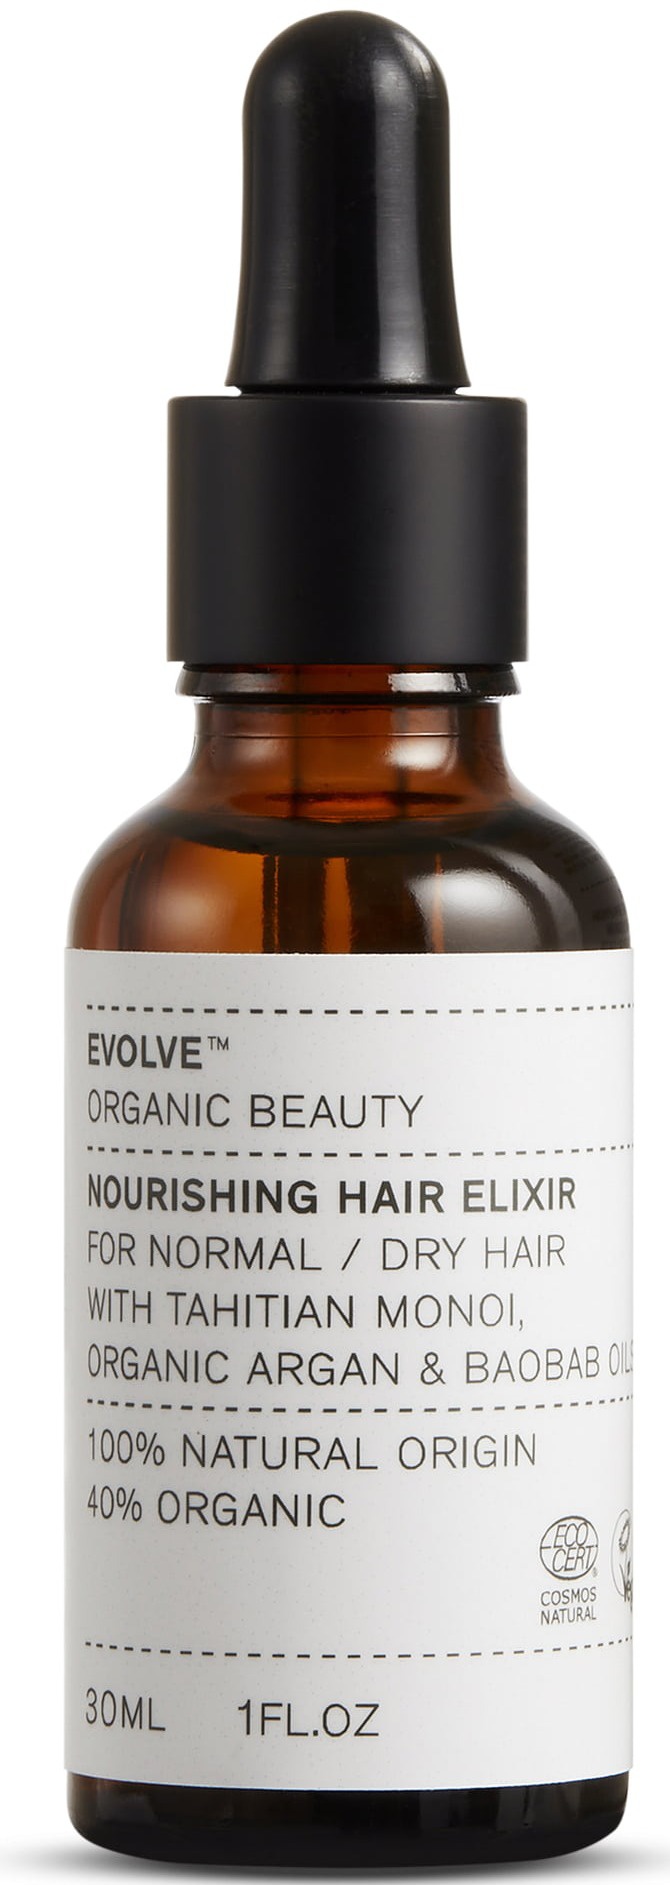 Evolve Organic Beauty Nourishing Hair Elixir